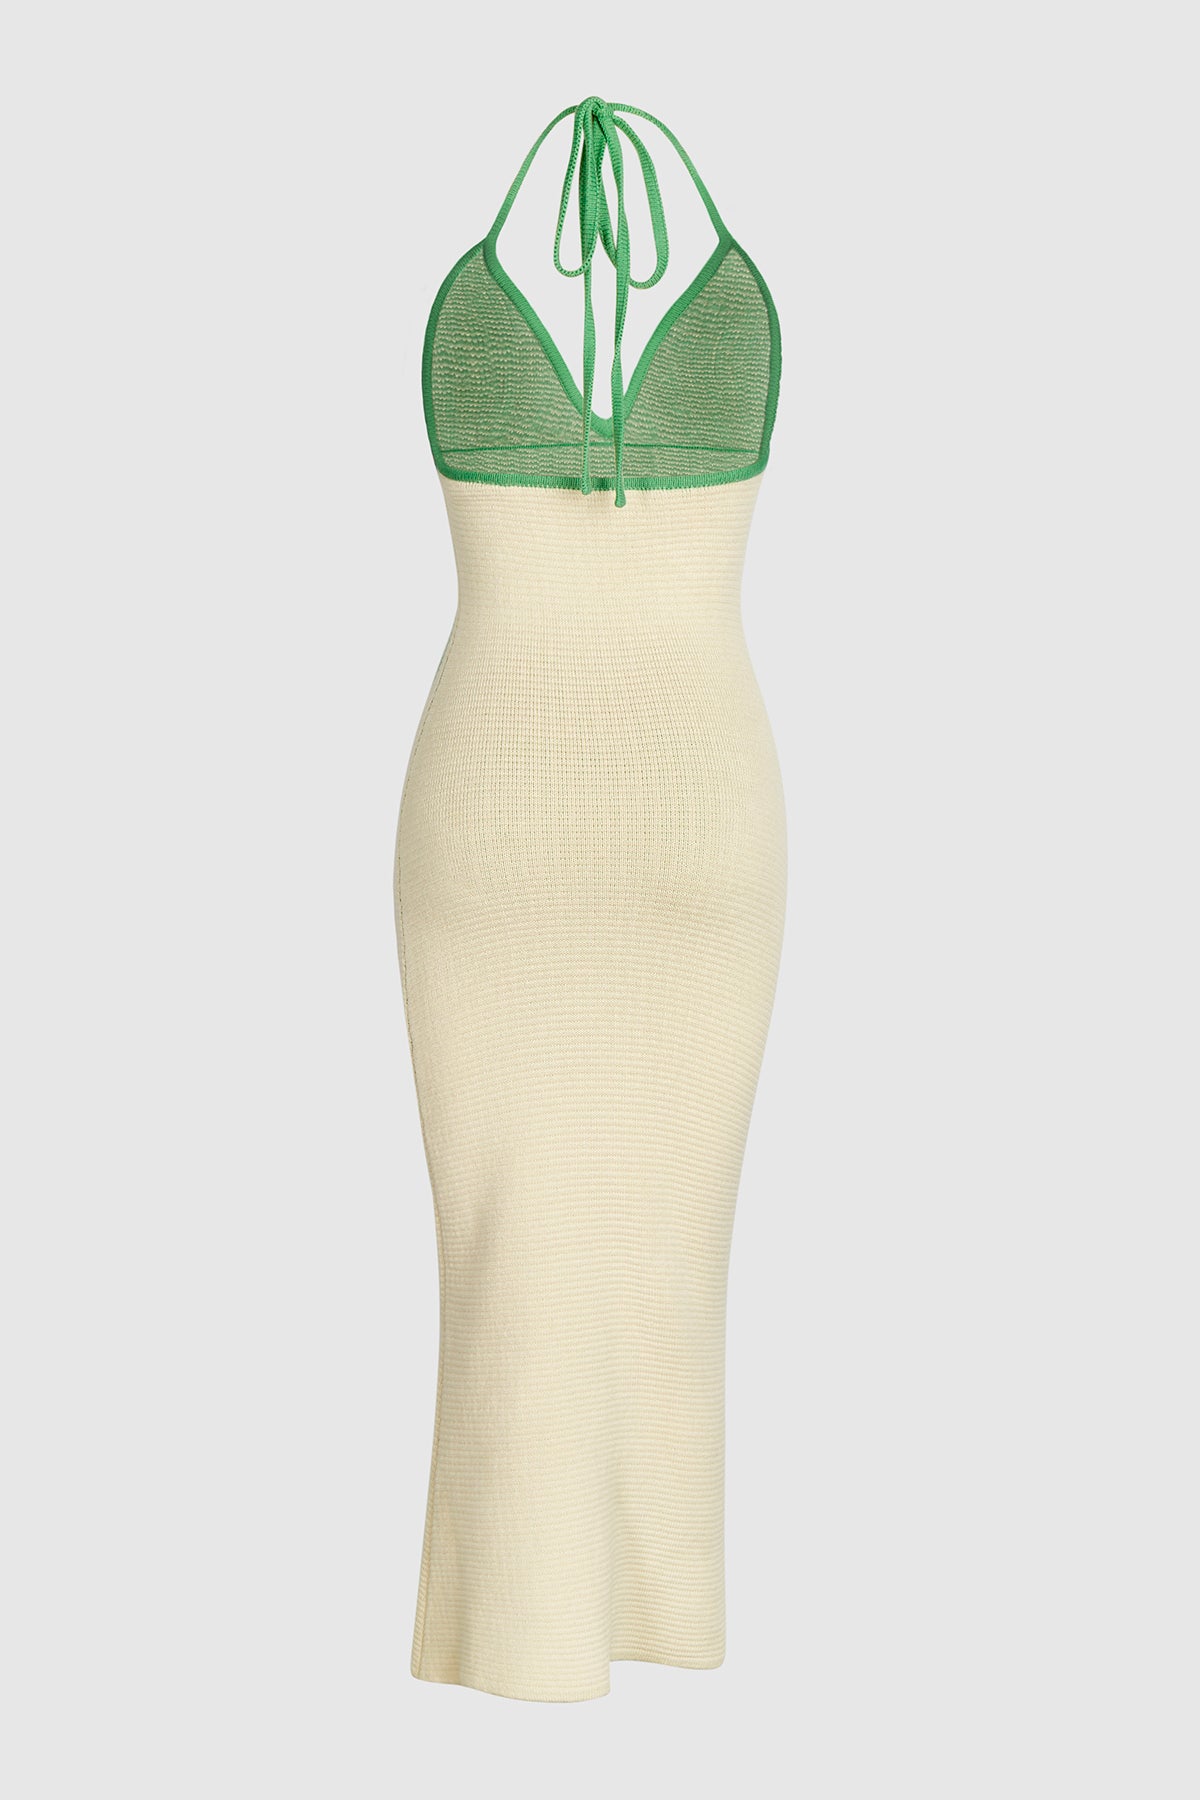 Hibiscus Knit Dress - Ivory